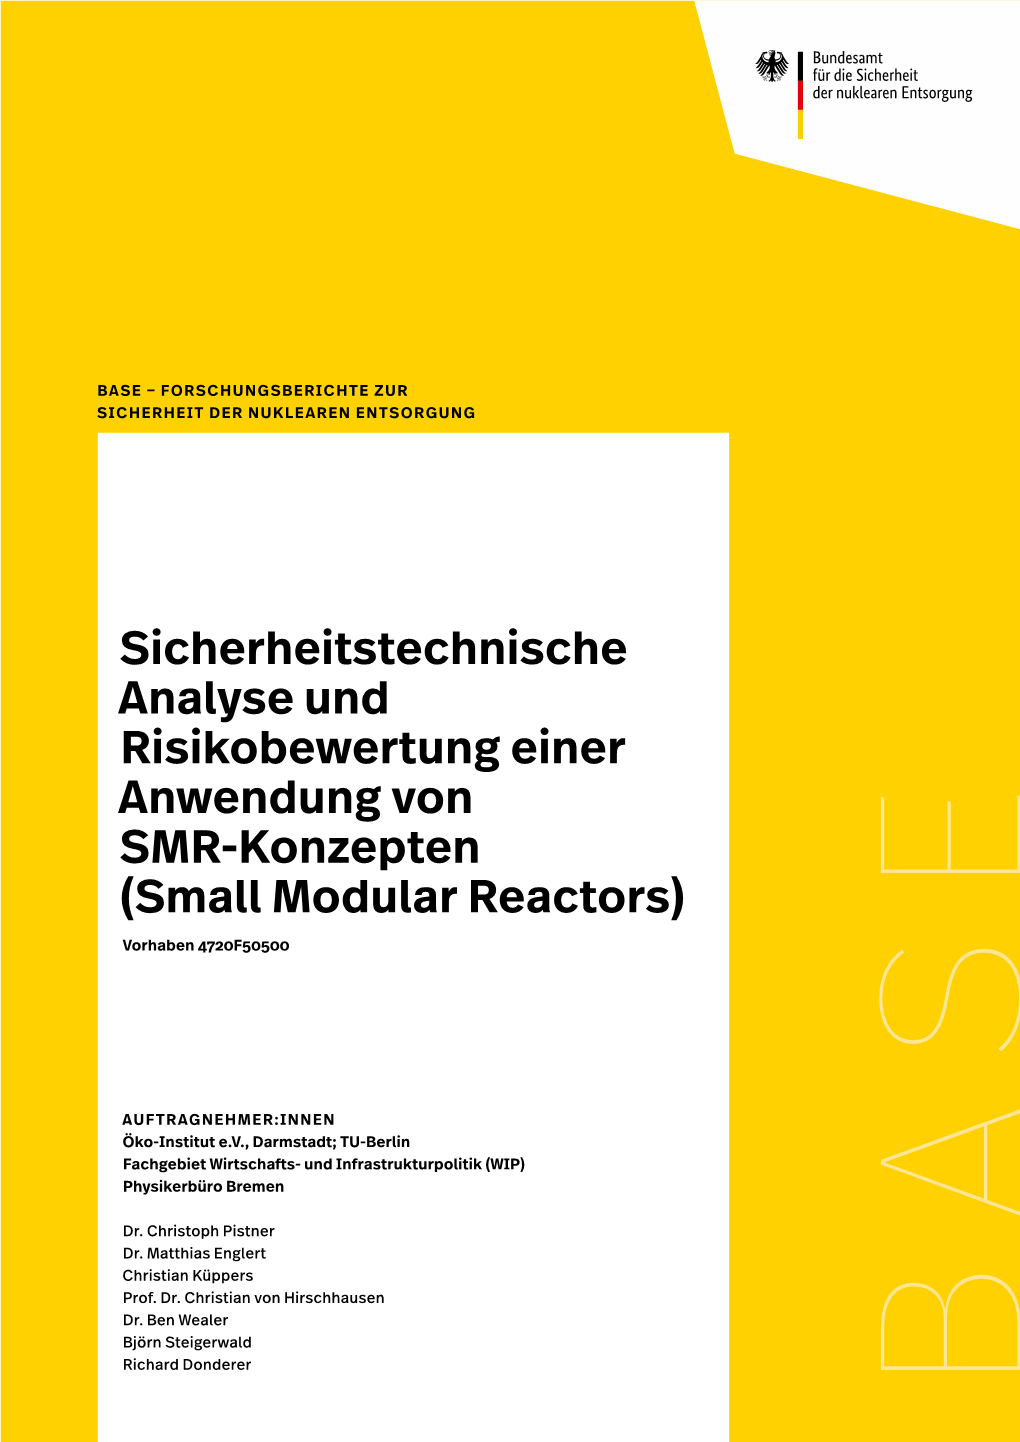 Small Modular Reactors) Vorhaben 4720F50500